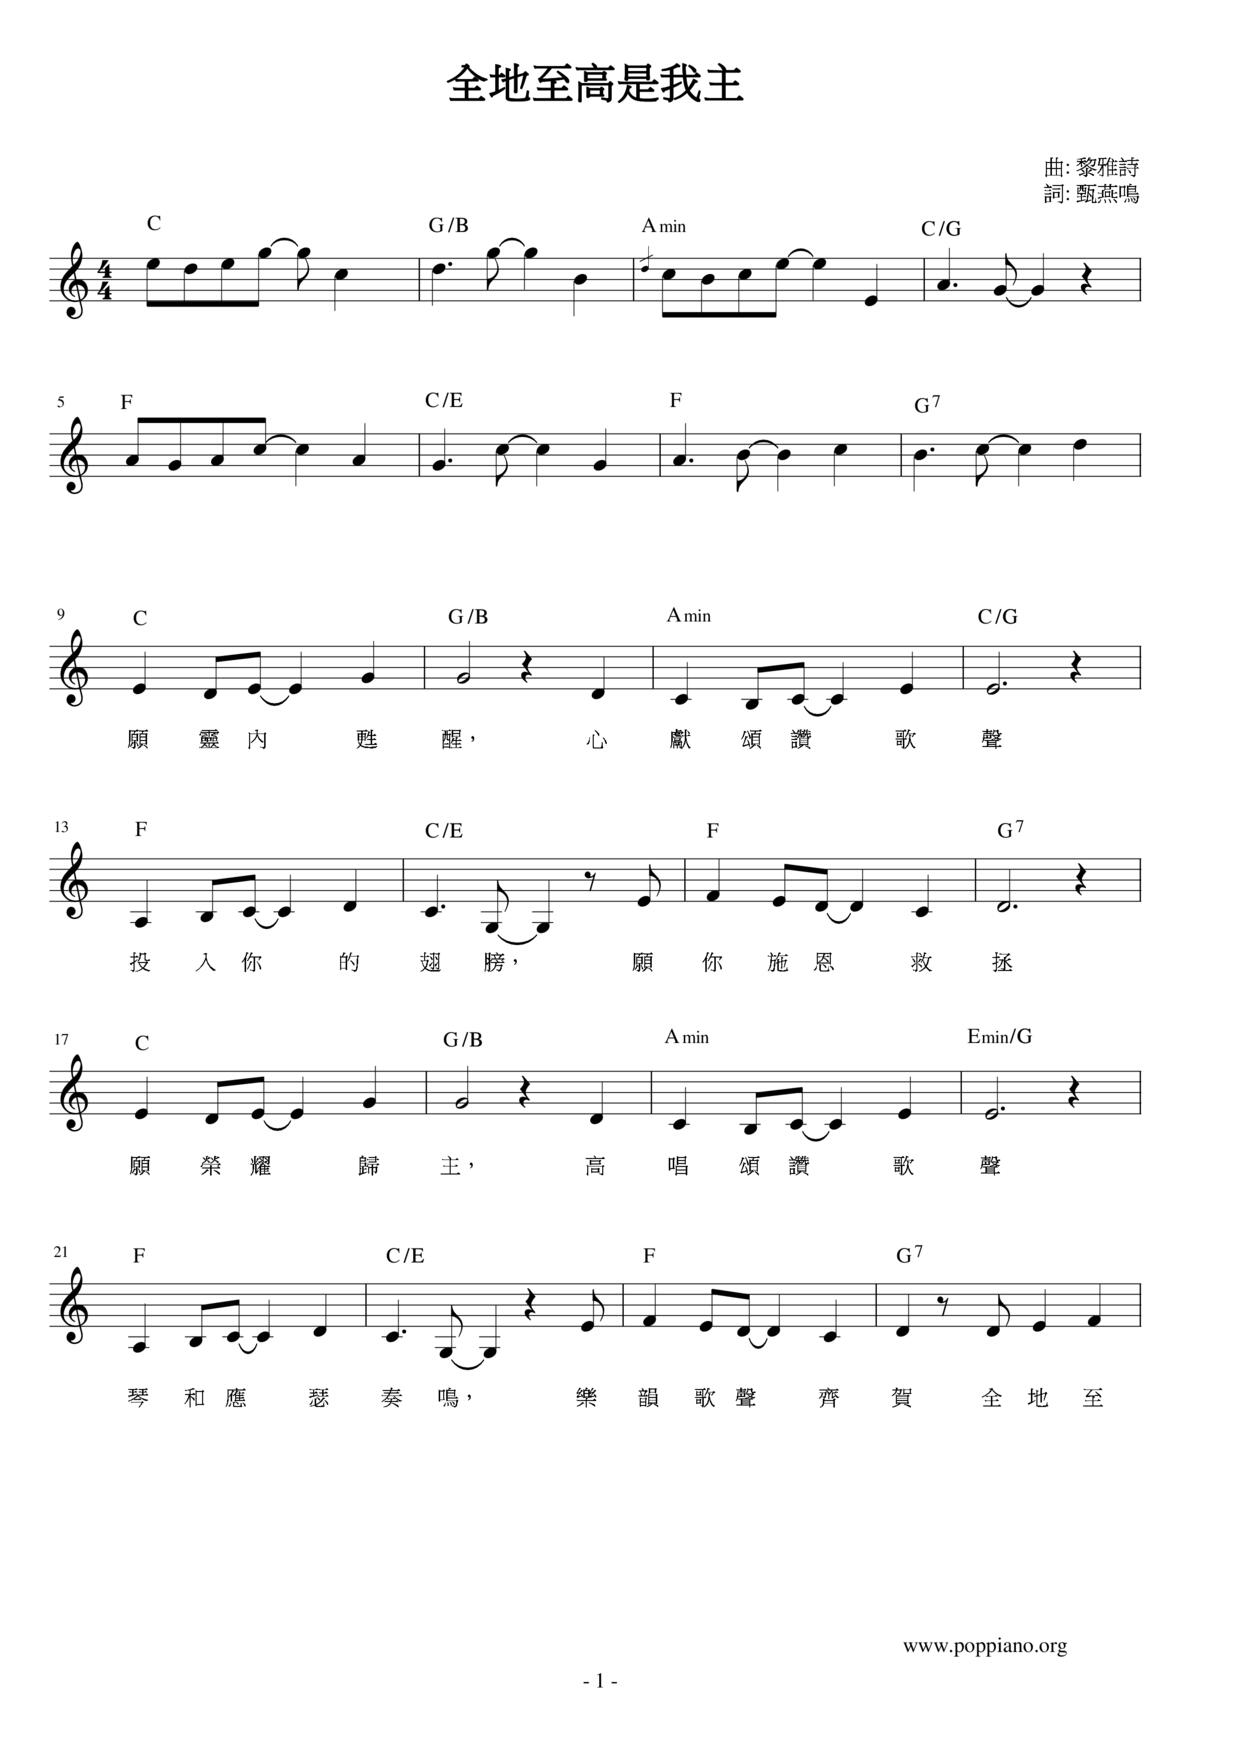 ☆ 全地至高是我主All Versions - Sheet Music / Piano Score Free PDF 